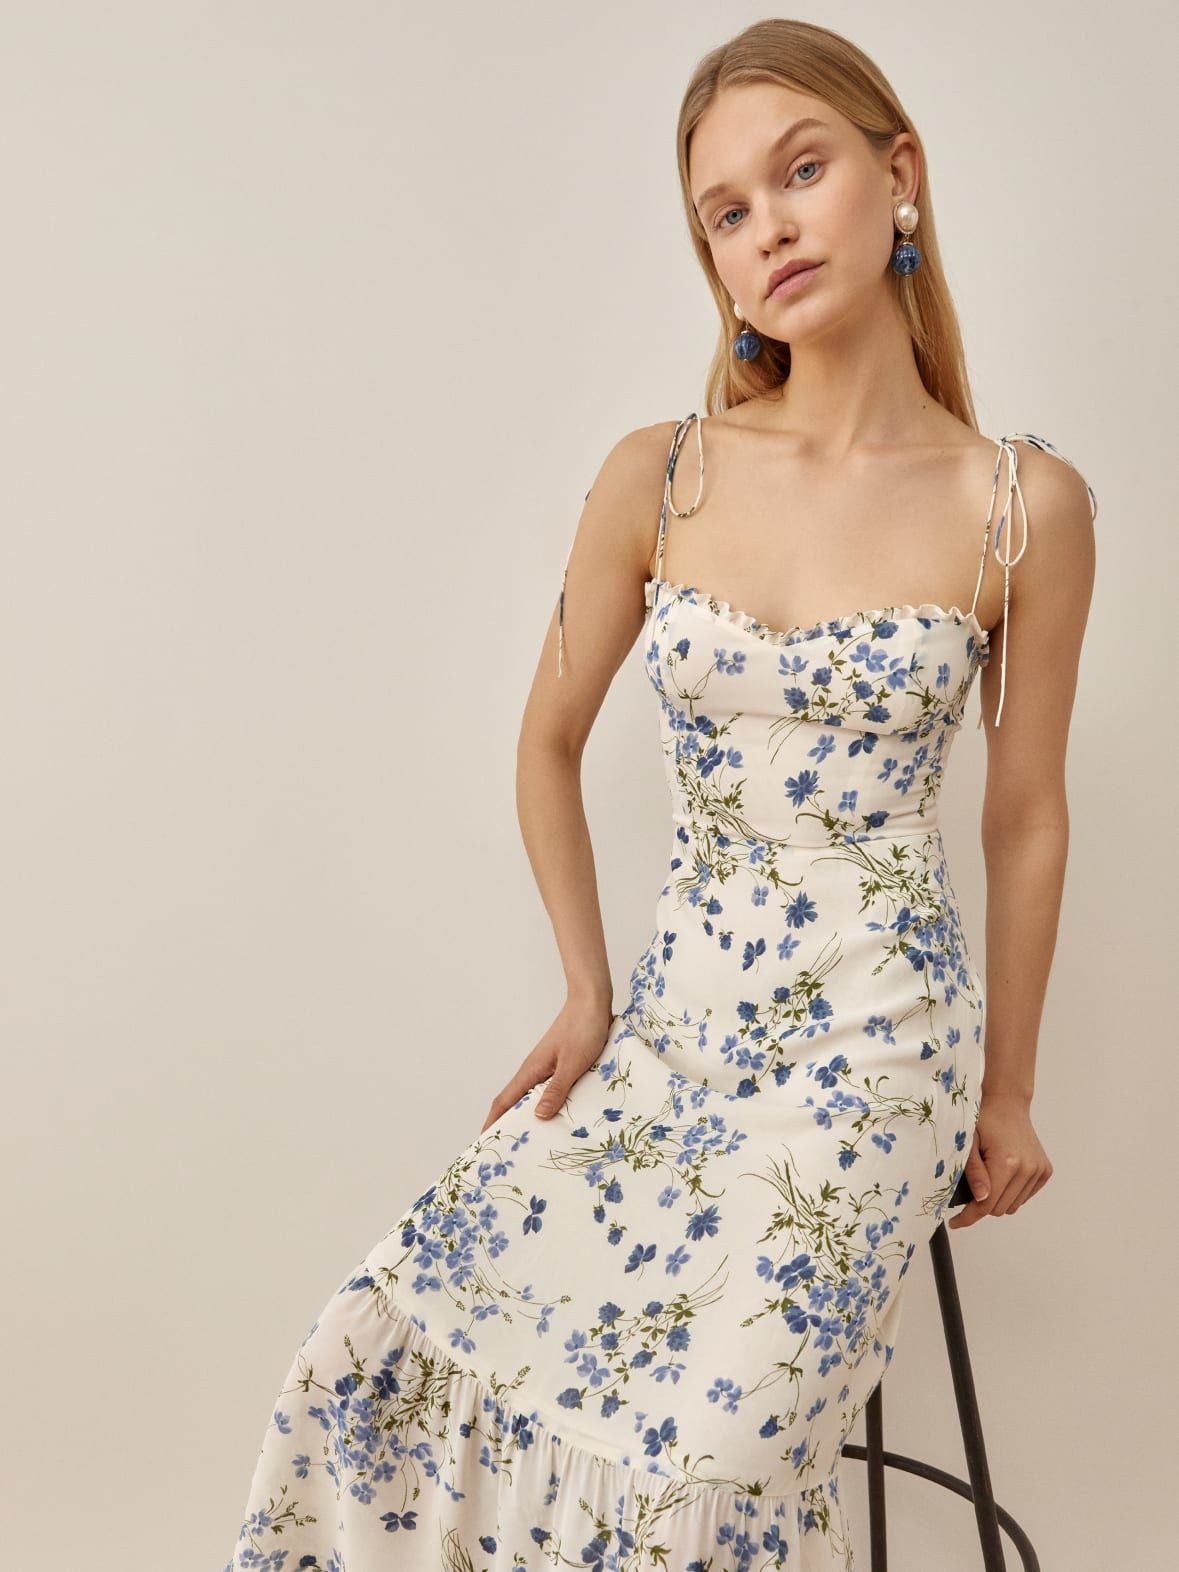 24 Cute Spring Dresses 2022 - Spring ...